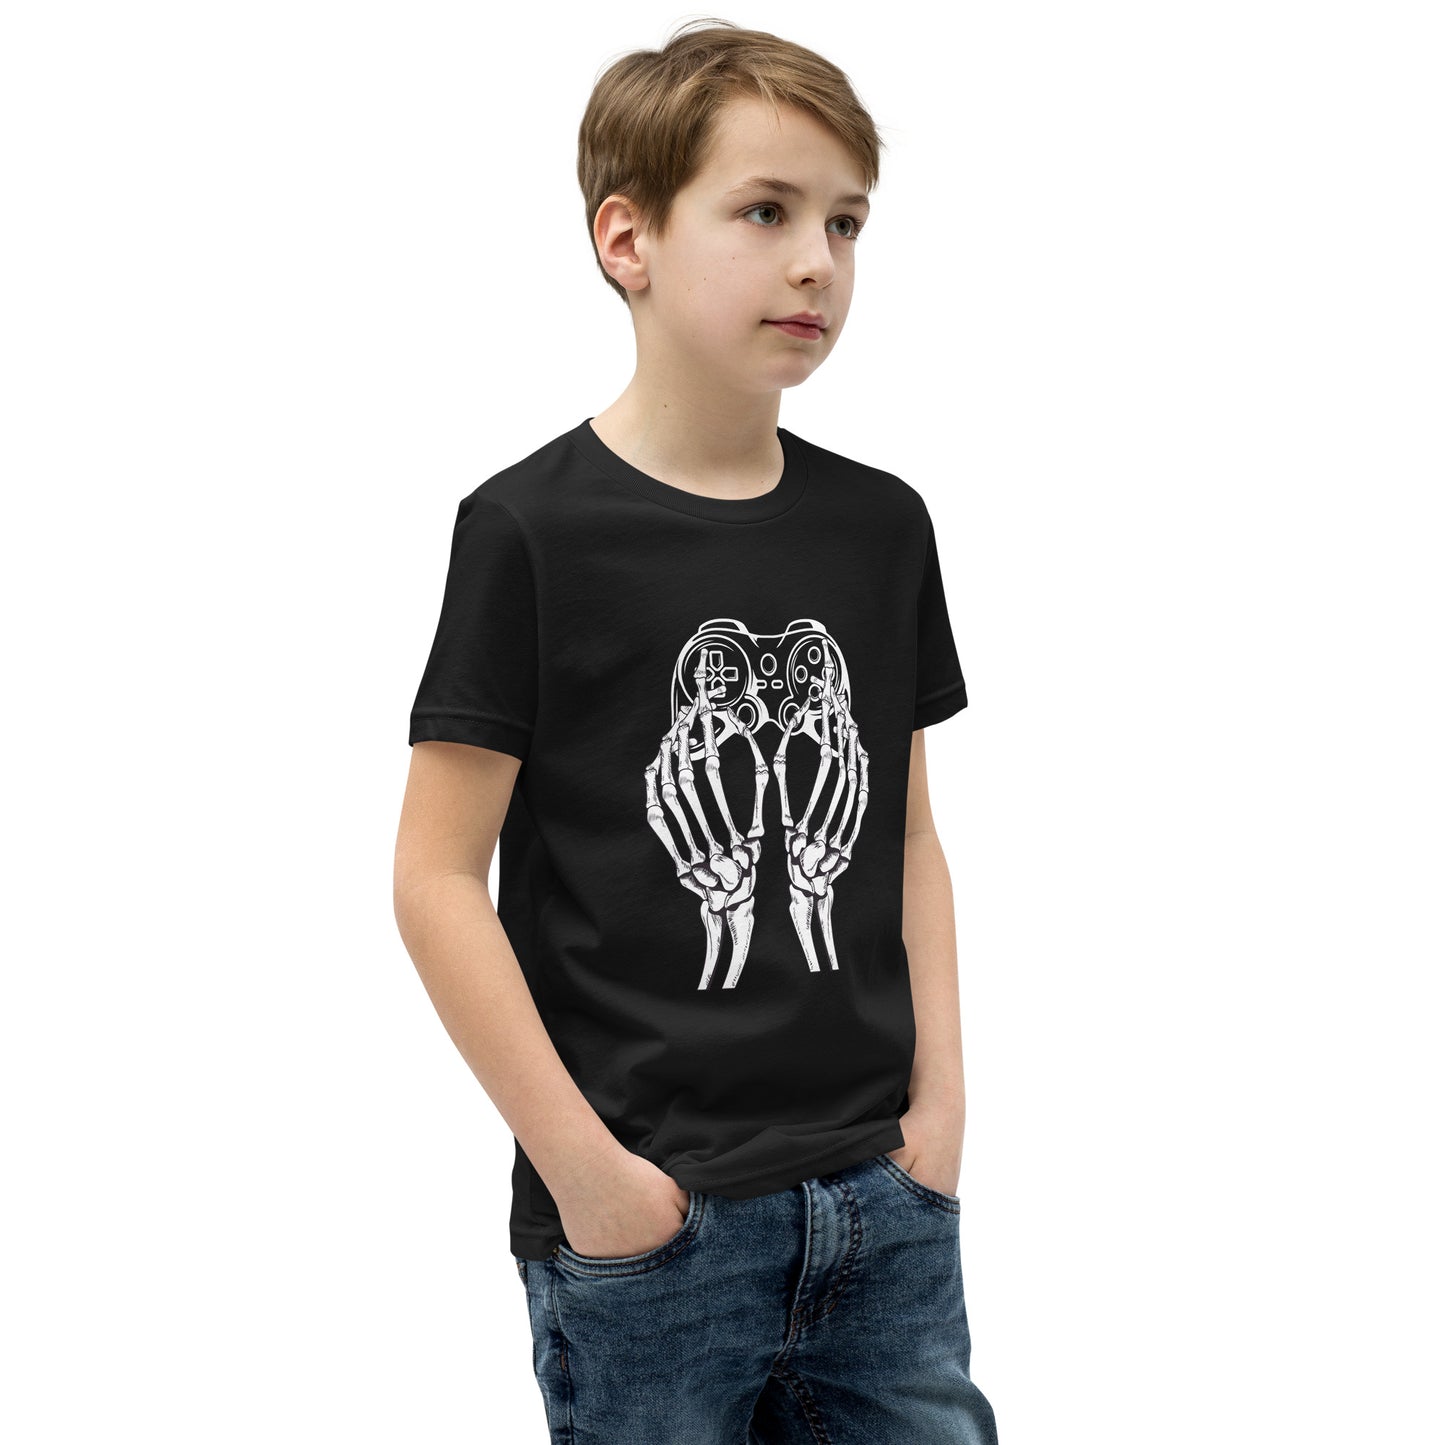 Skeleton Gamer Youth Halloween T-shirt